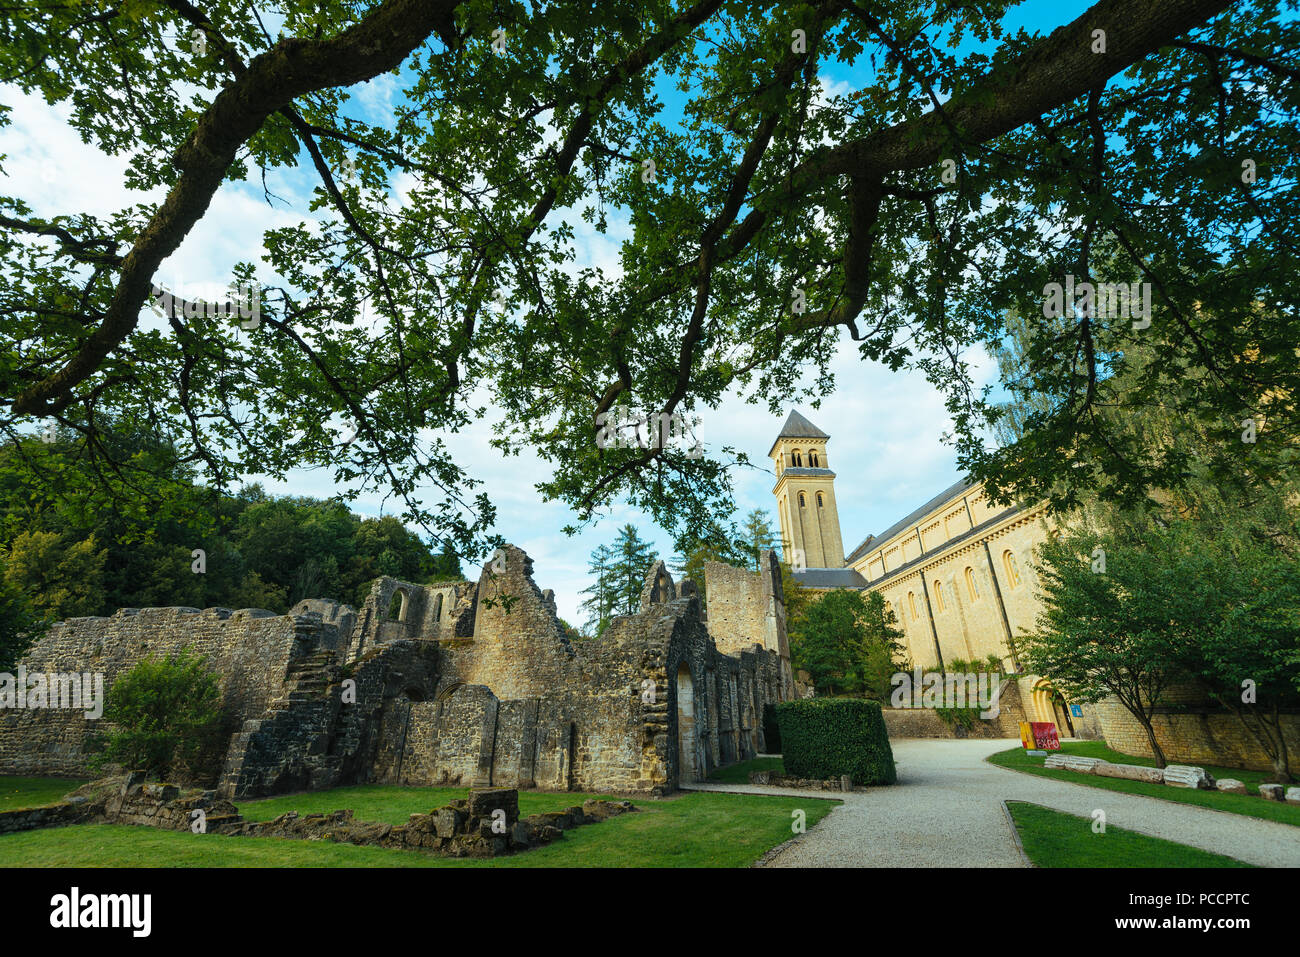 Abtei Orval (Abbaye Notre-Dame d'Orval), Villers-devant-Orval (Orval), Florenville, Provinz Luxemburg, Belgien. Stockfoto